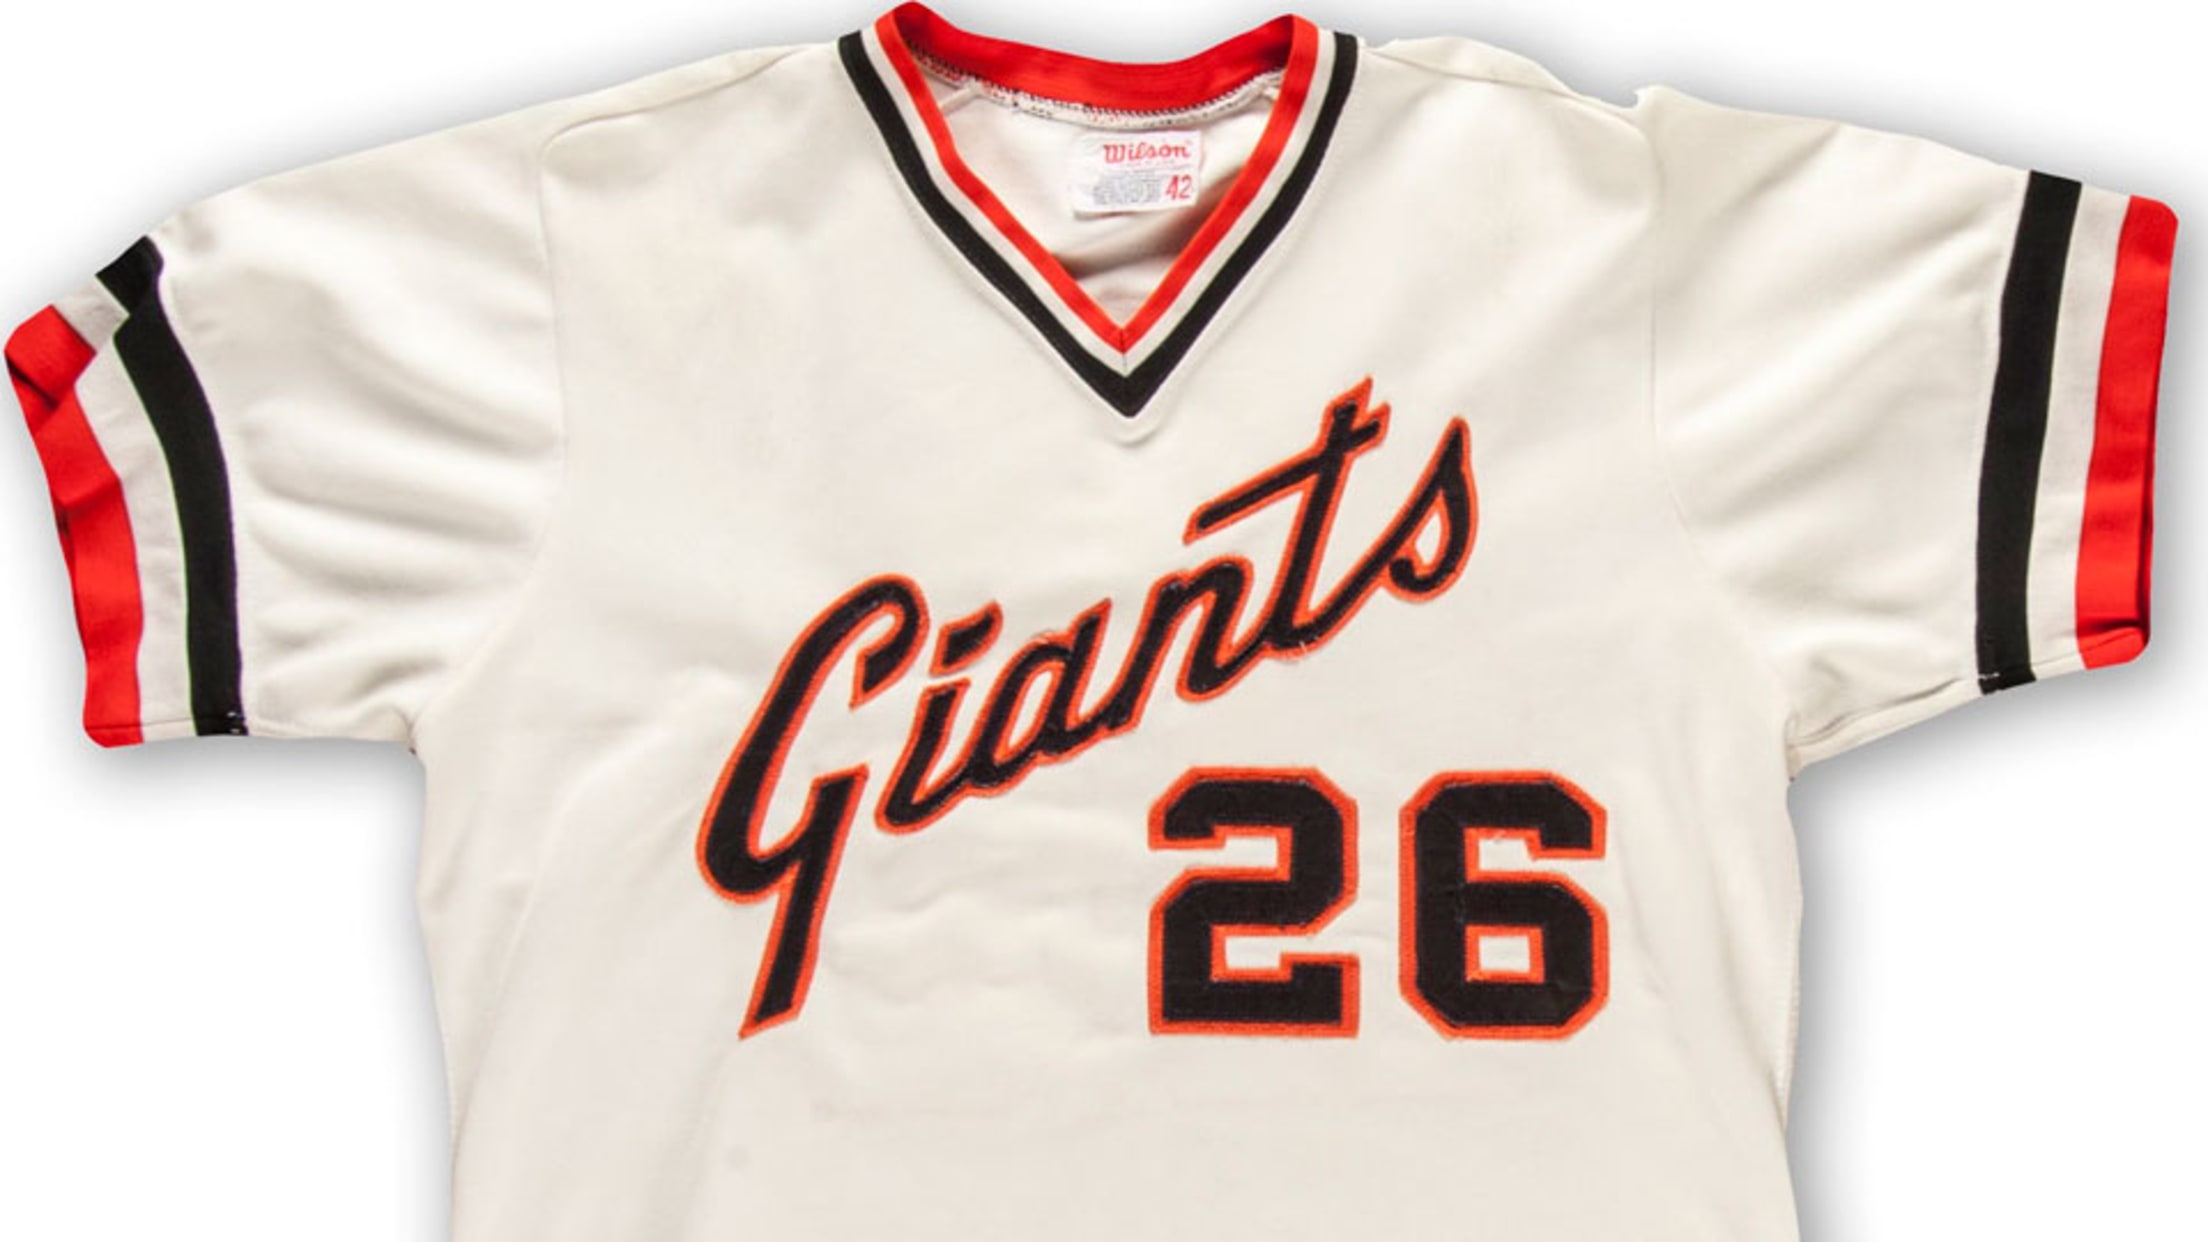 giants orange and white uniform